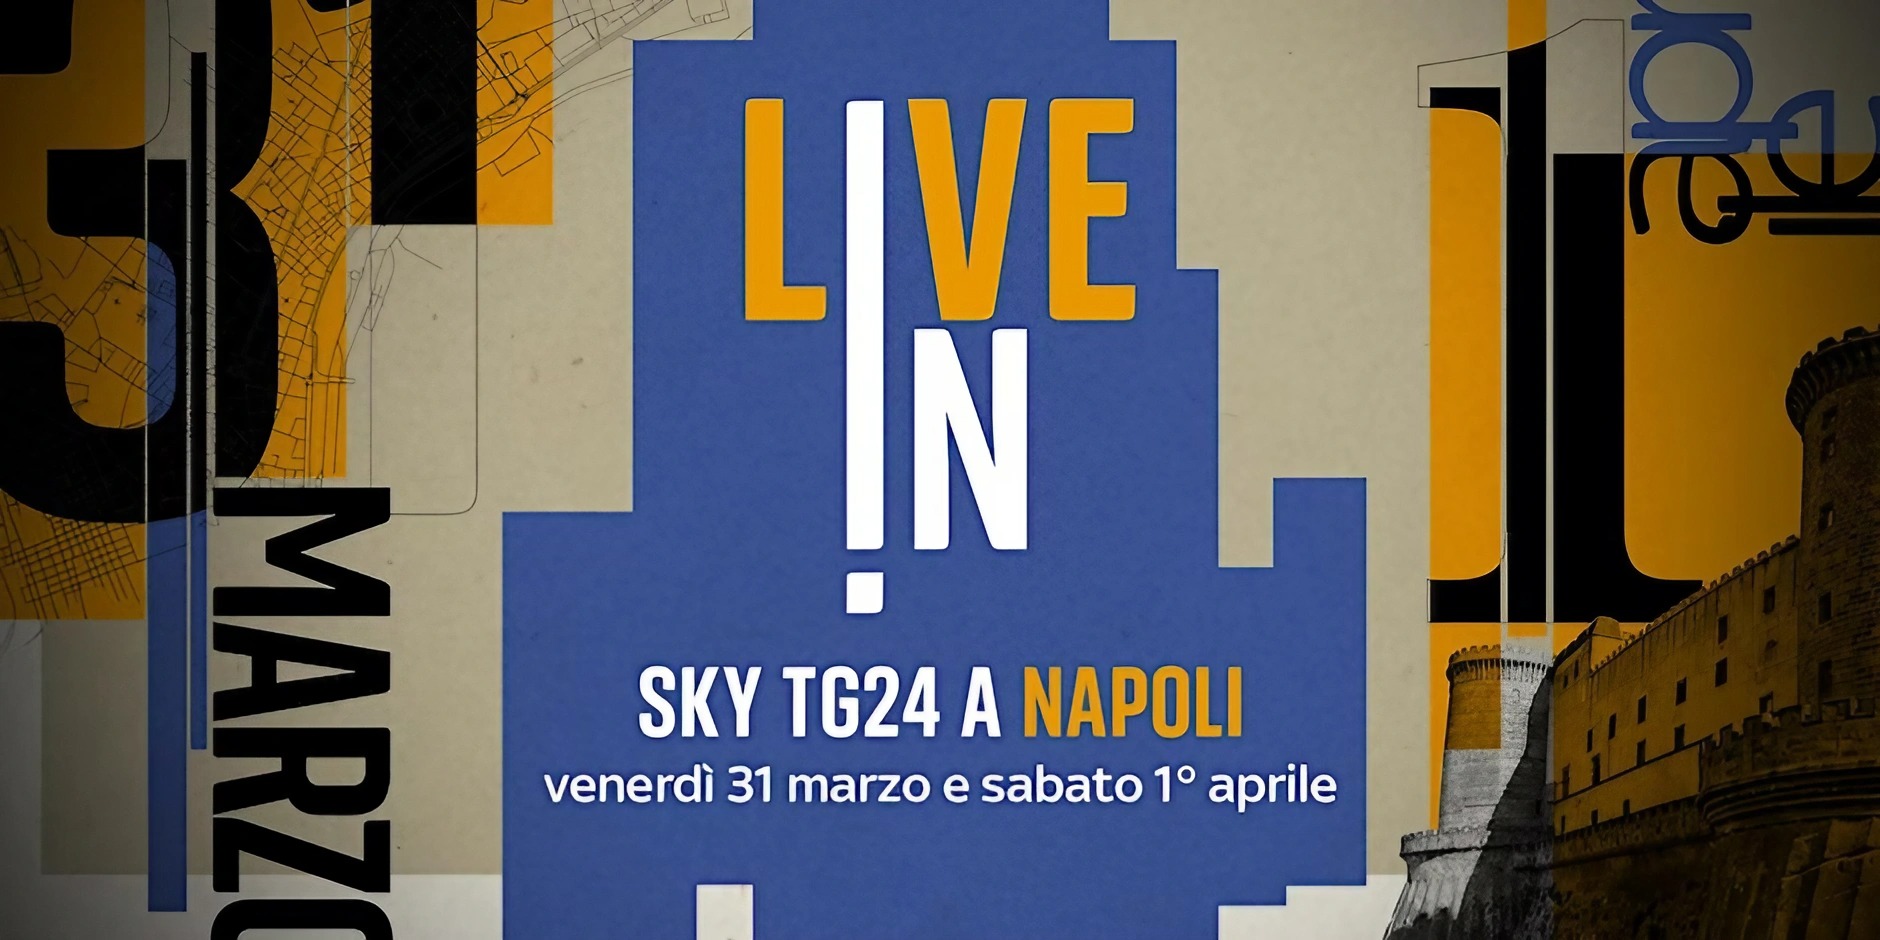 sky tg 24 mit live in Neapel